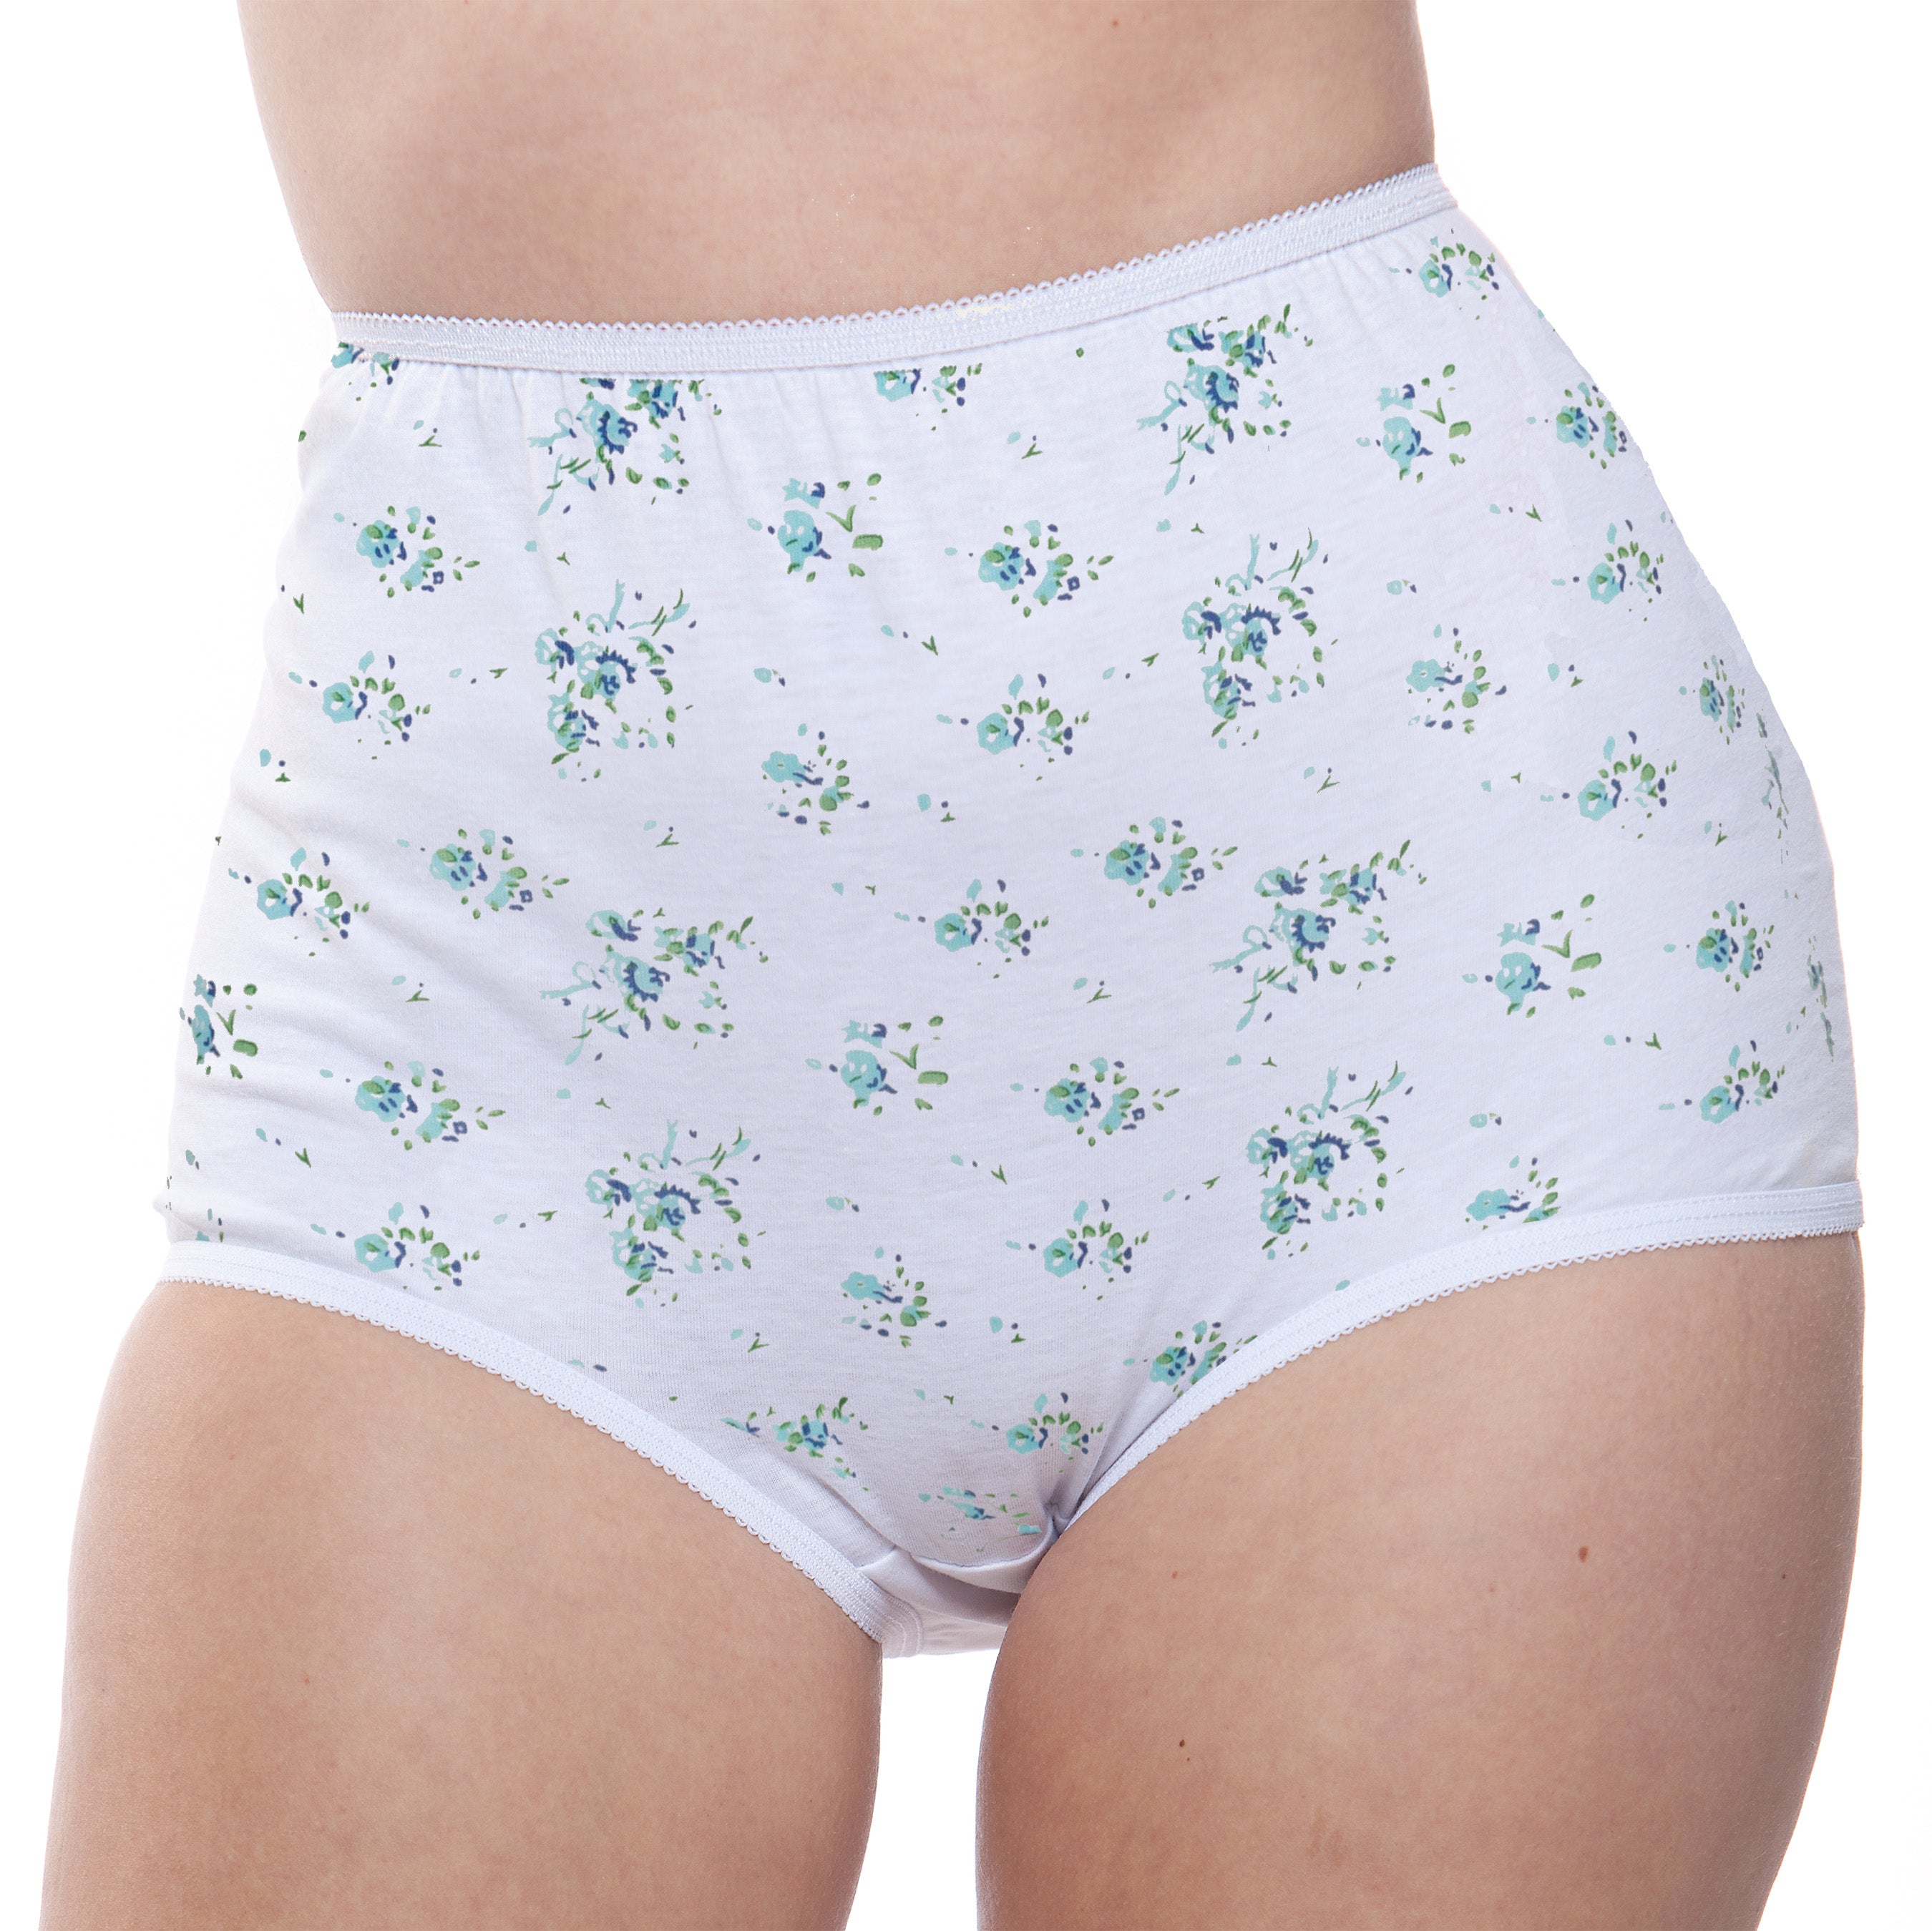 Buy ASJAR Printed Panties Women's Cartoon Floral Cotton Panty for